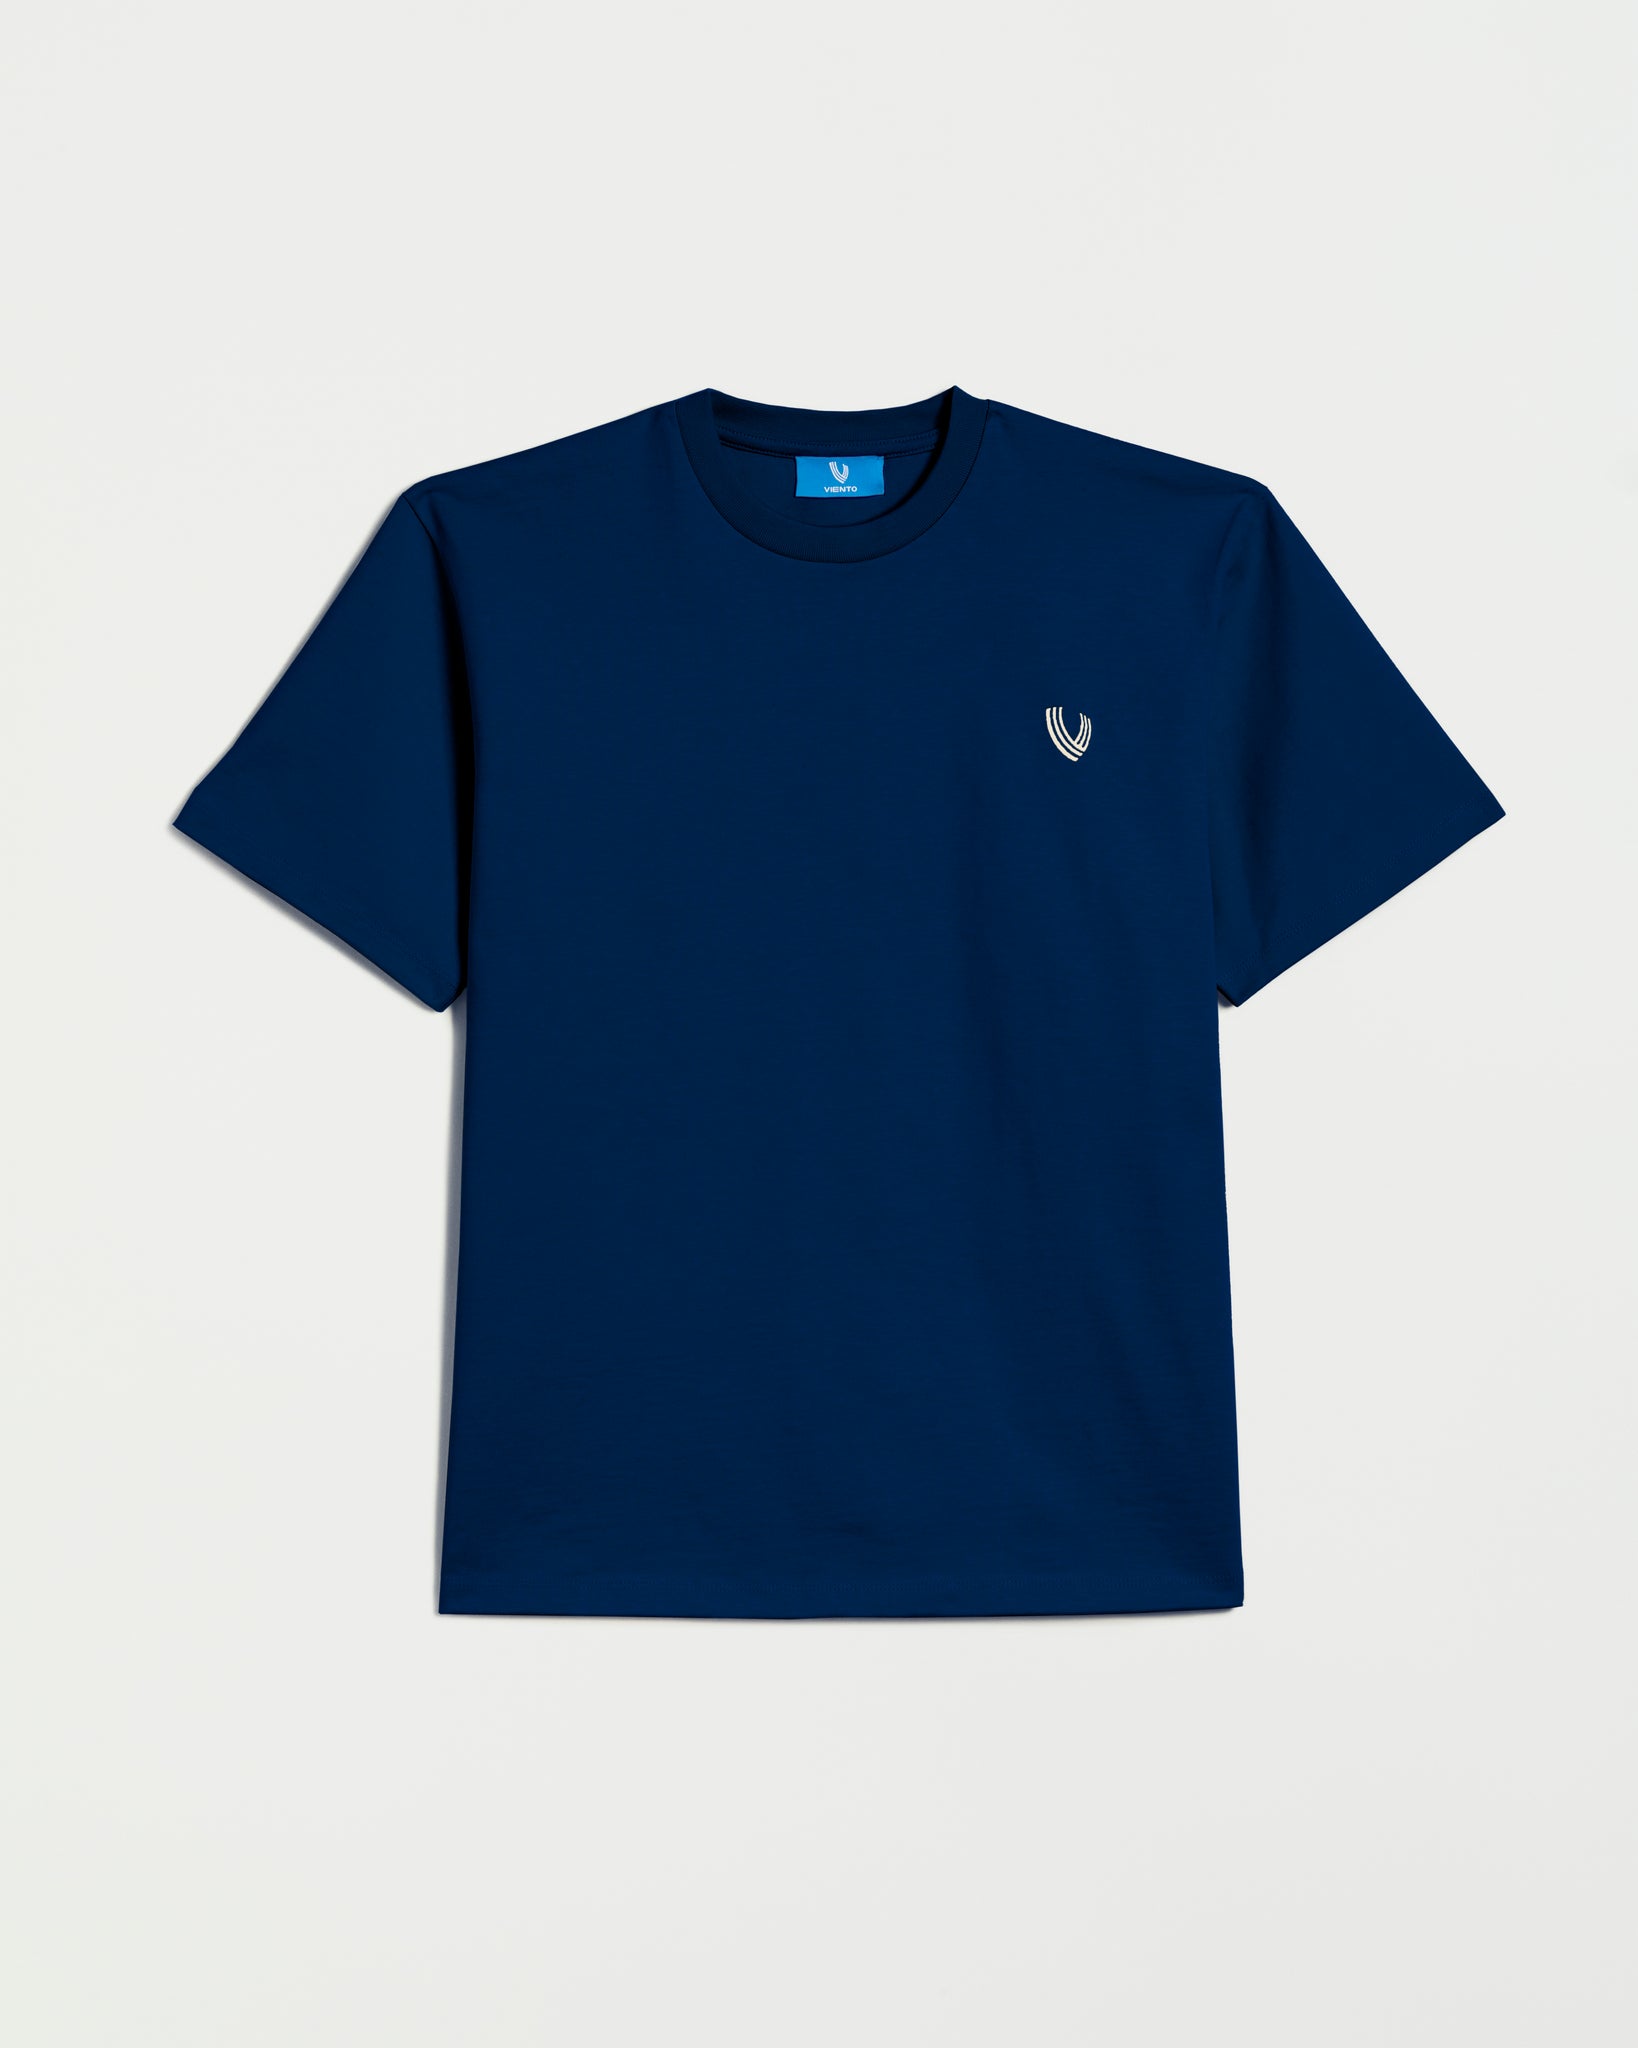 Lifestyle T-Shirt Navy Blue